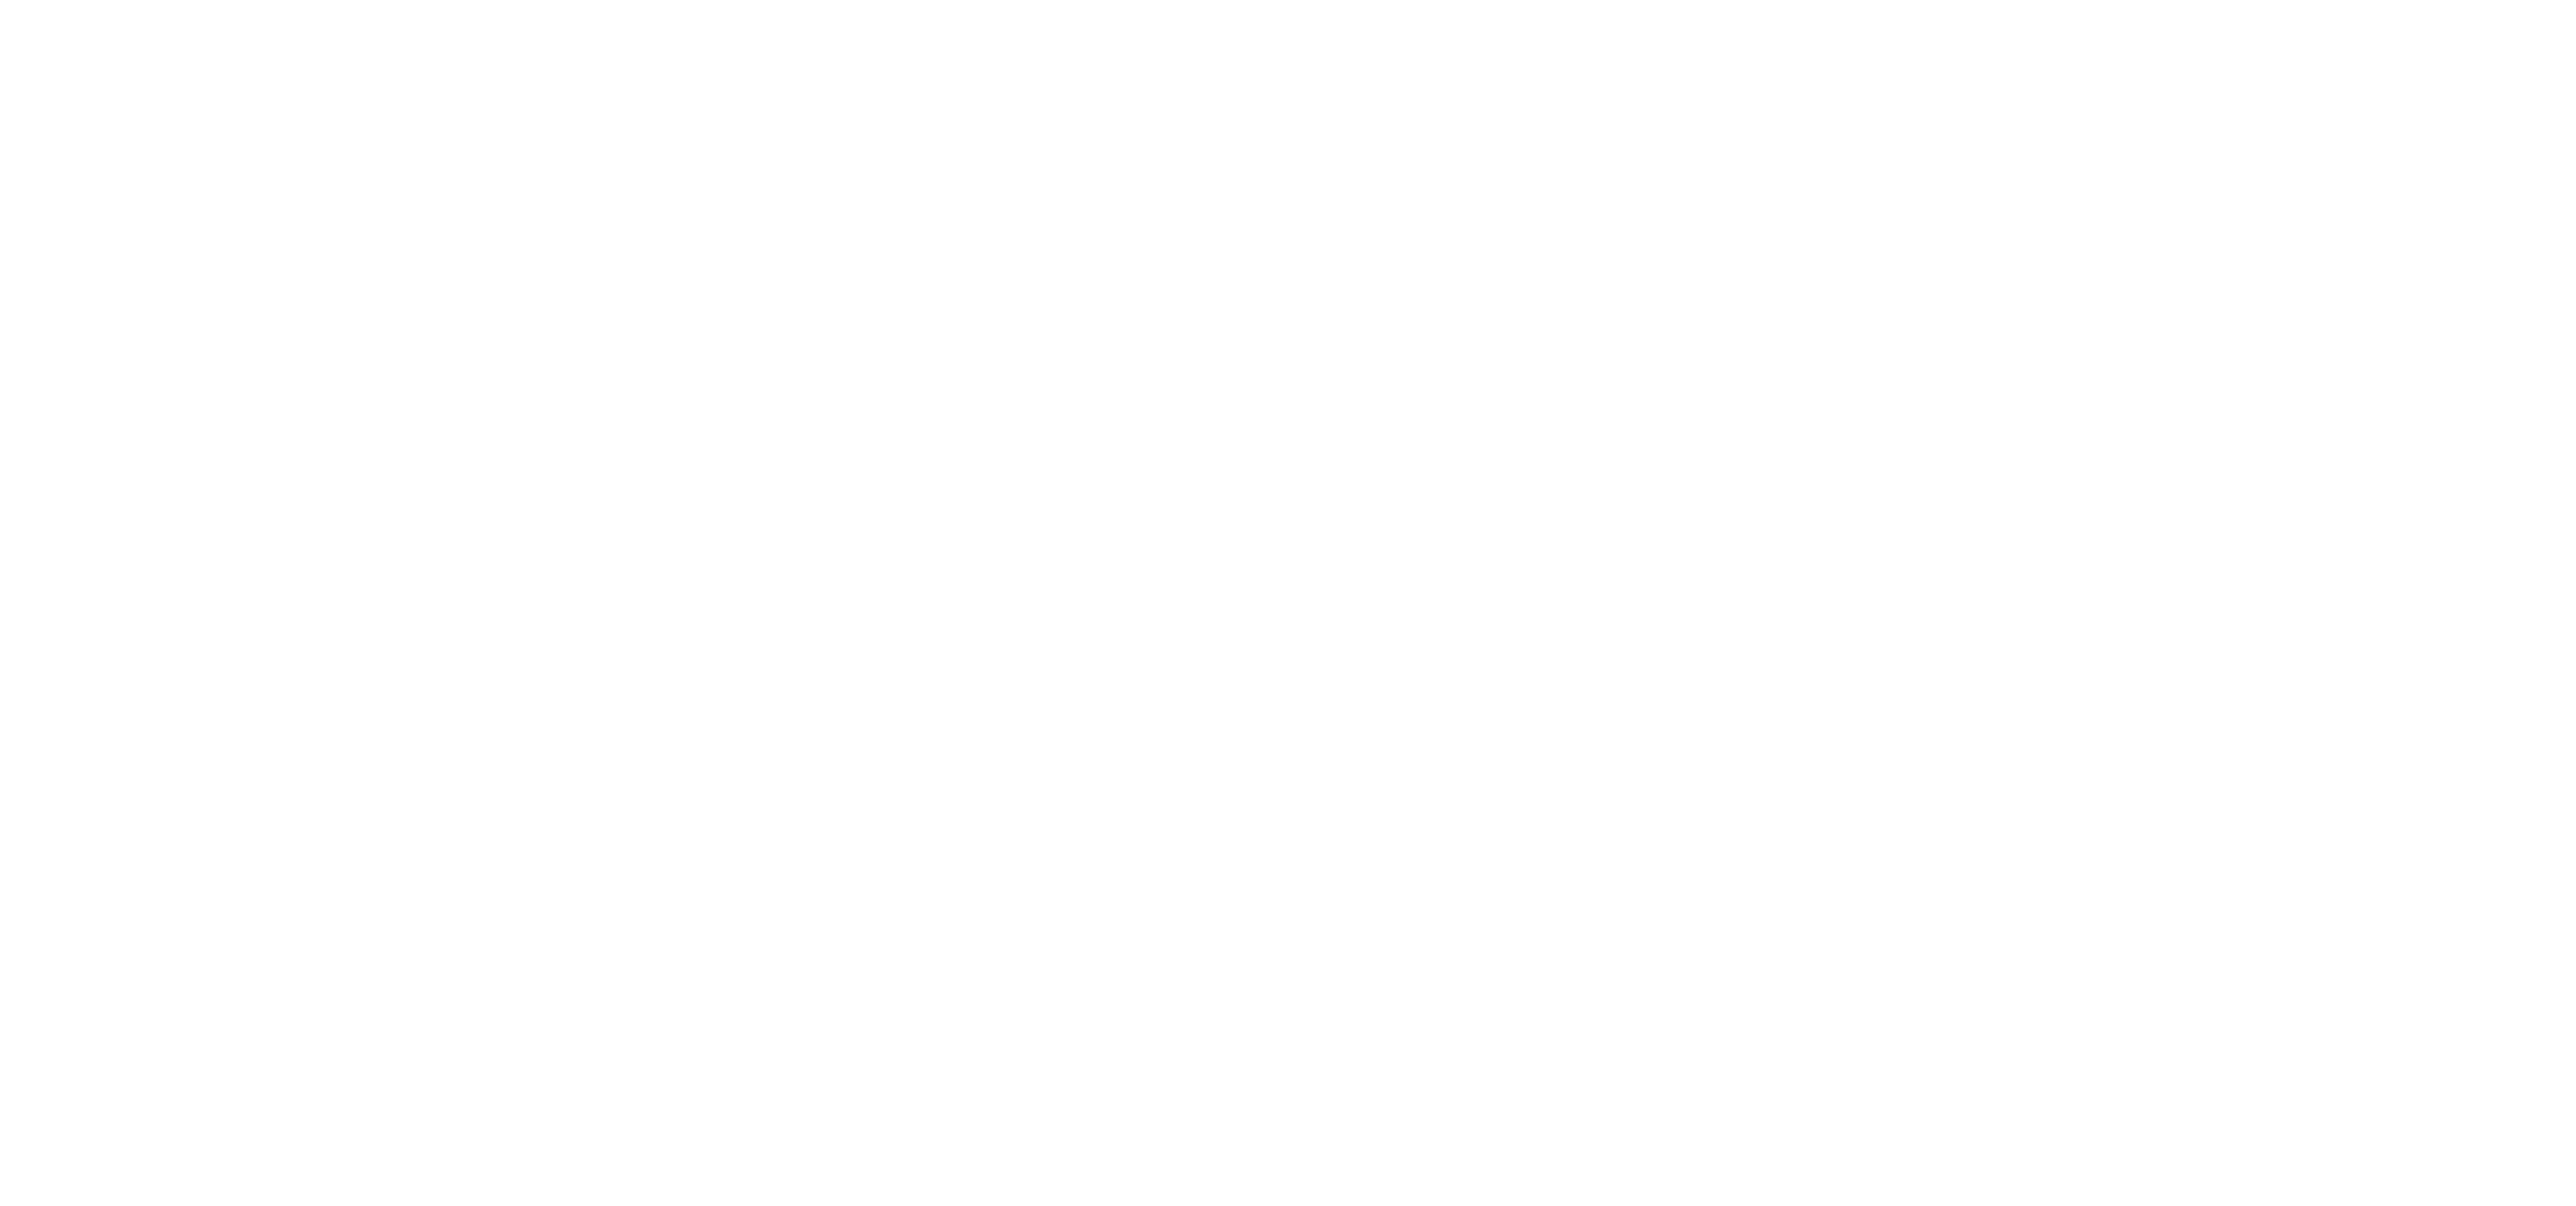 Riley Abston